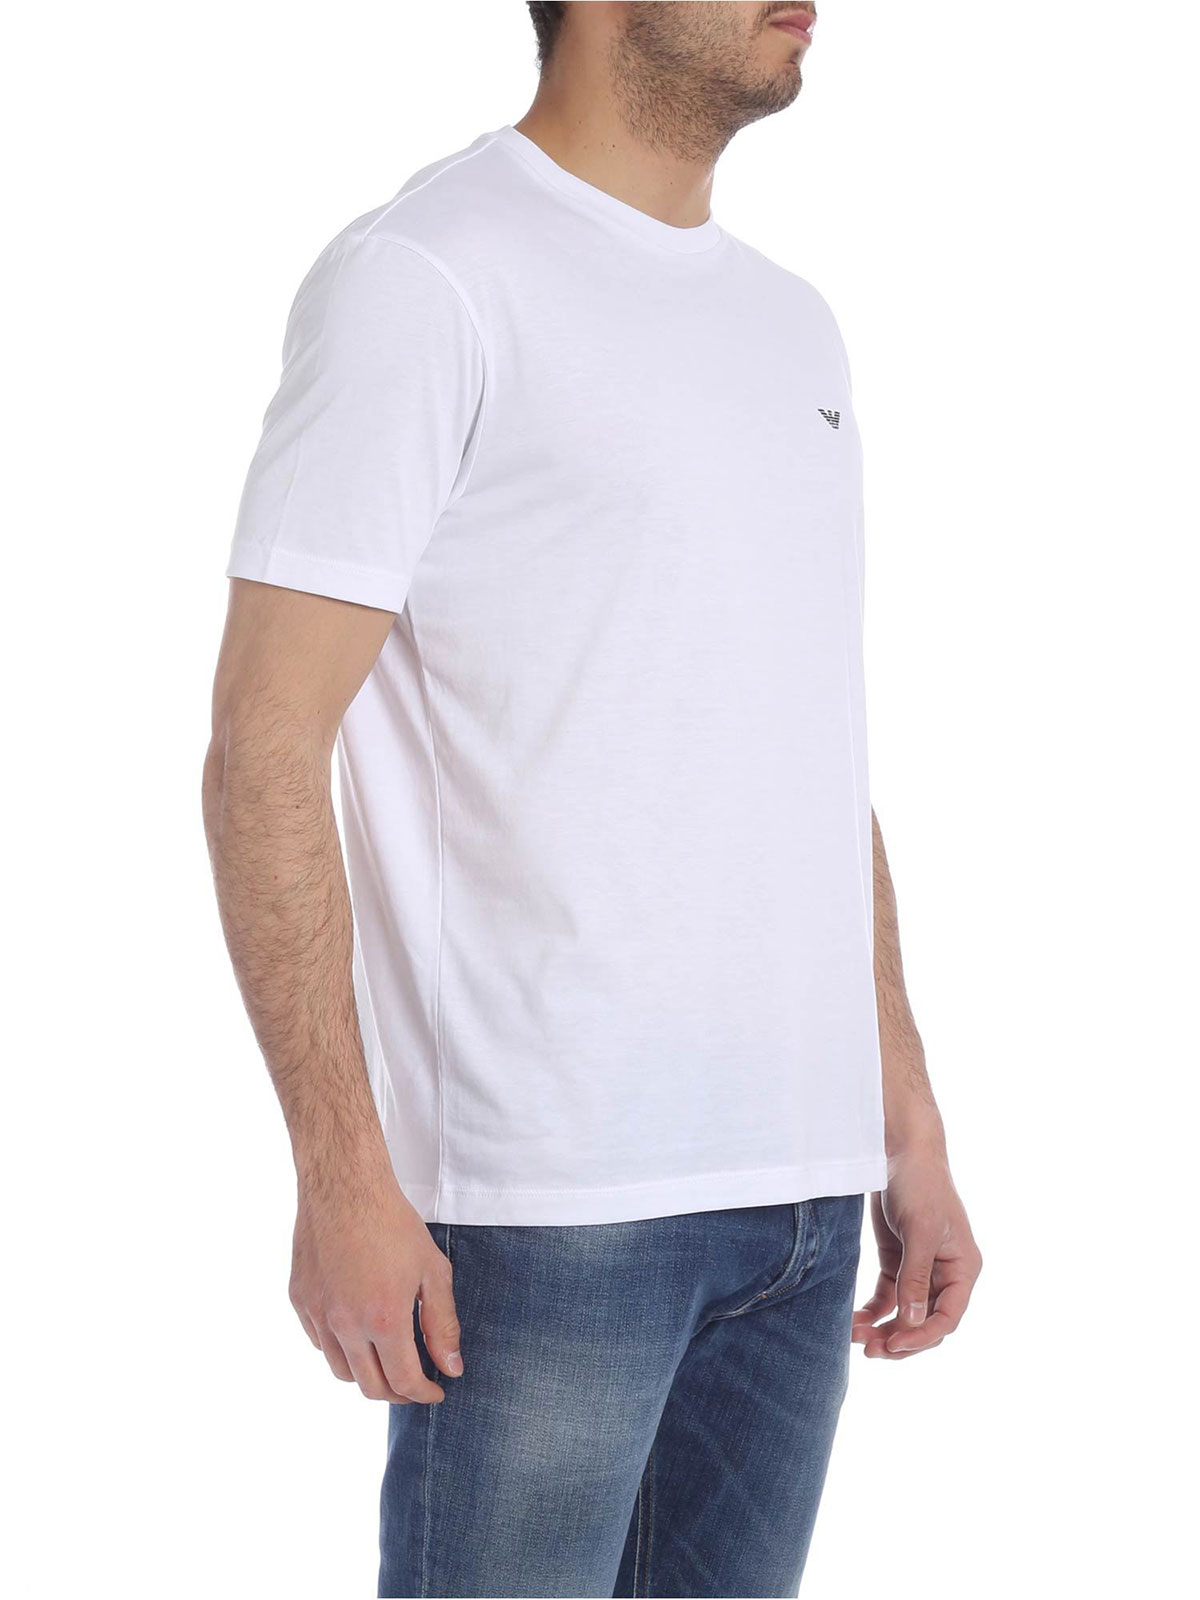 EMPORIO ARMANI | Men's T-Shirt 2 Pack,EMPORIO ARMANI | Men's T-Shirt 2 ...